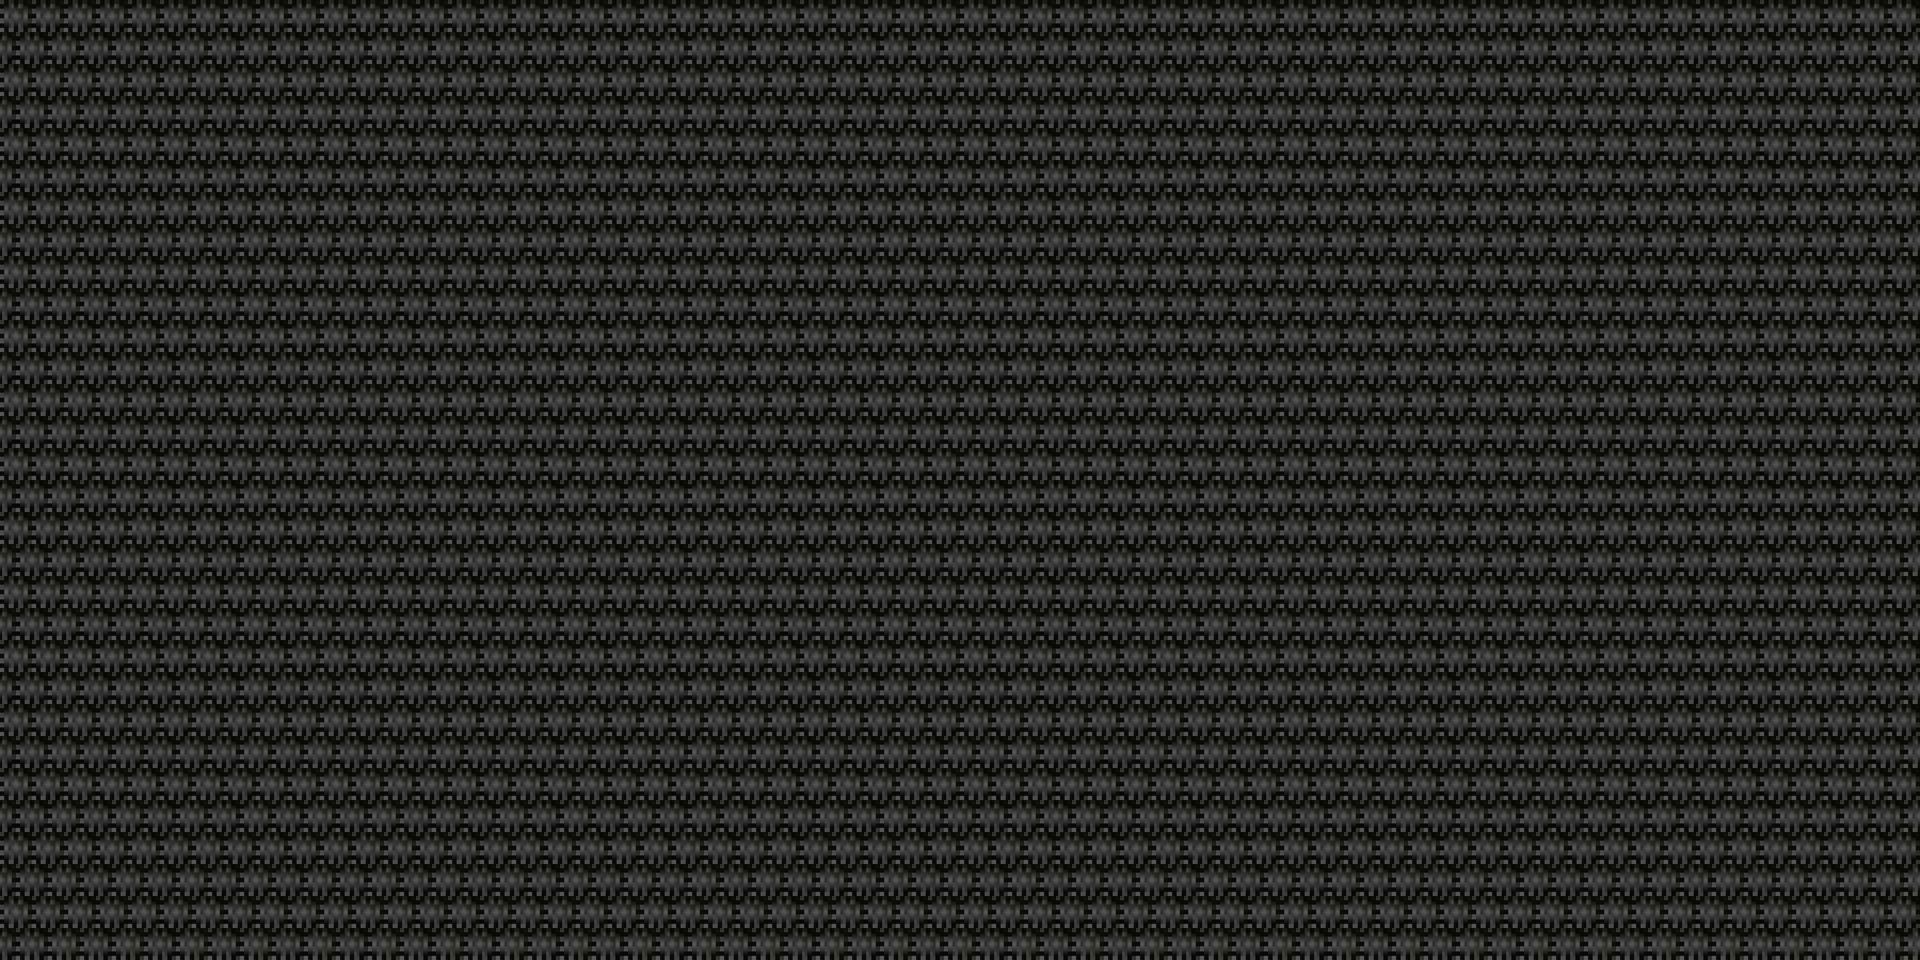 Kohlenstoff Ballaststoff Hintergrund modern dunkel abstrakt nahtlos Textur vektor